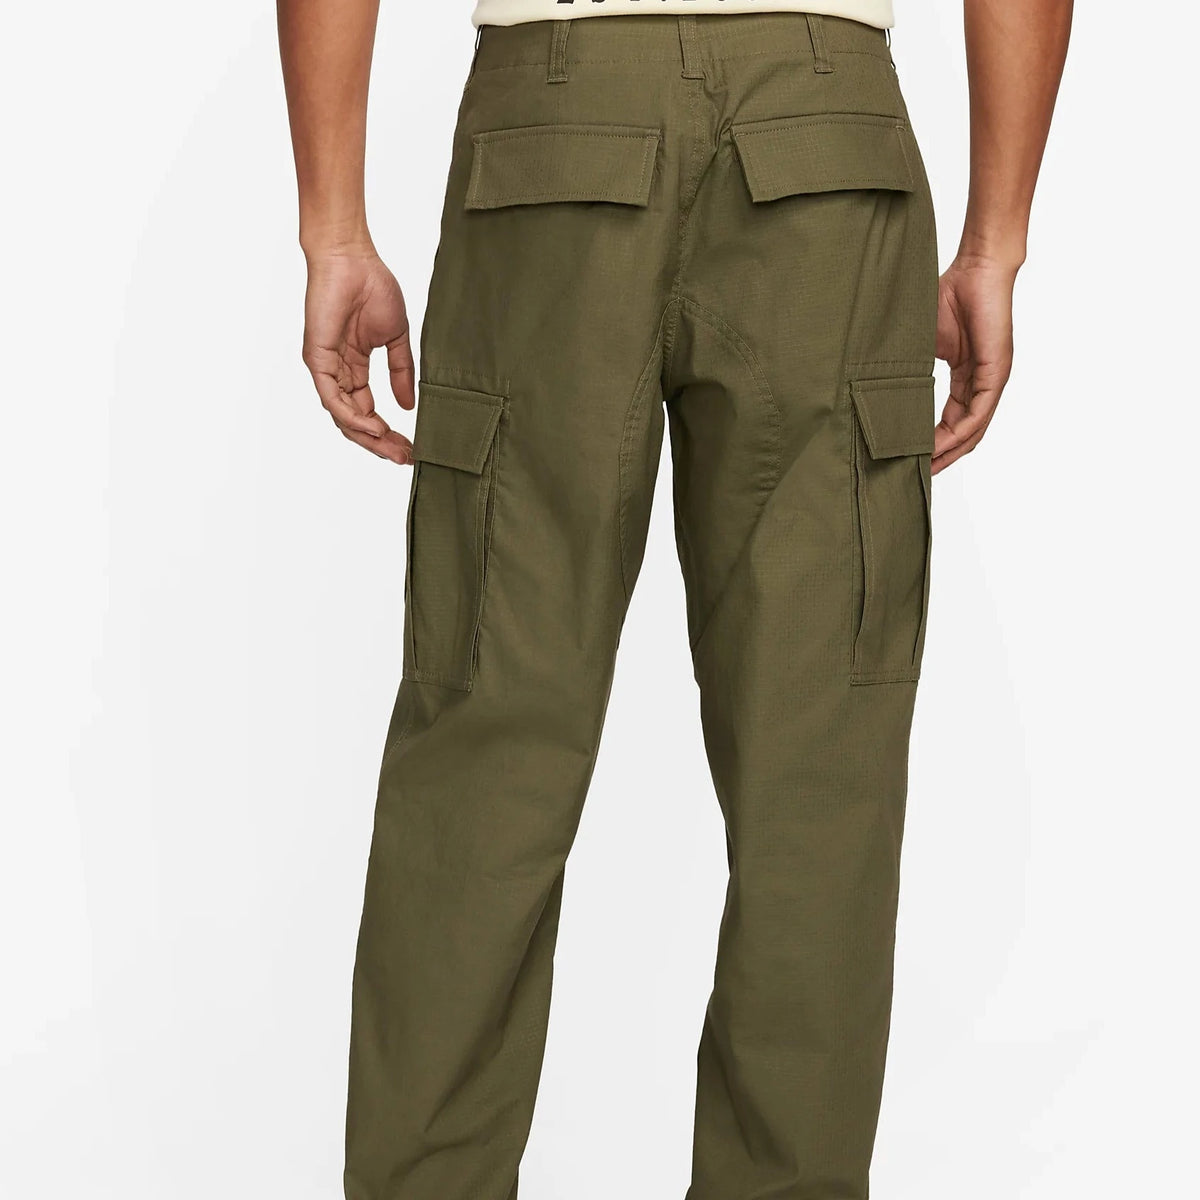 Nike SB Kearny Cargo Skate Pants - Medium Olive